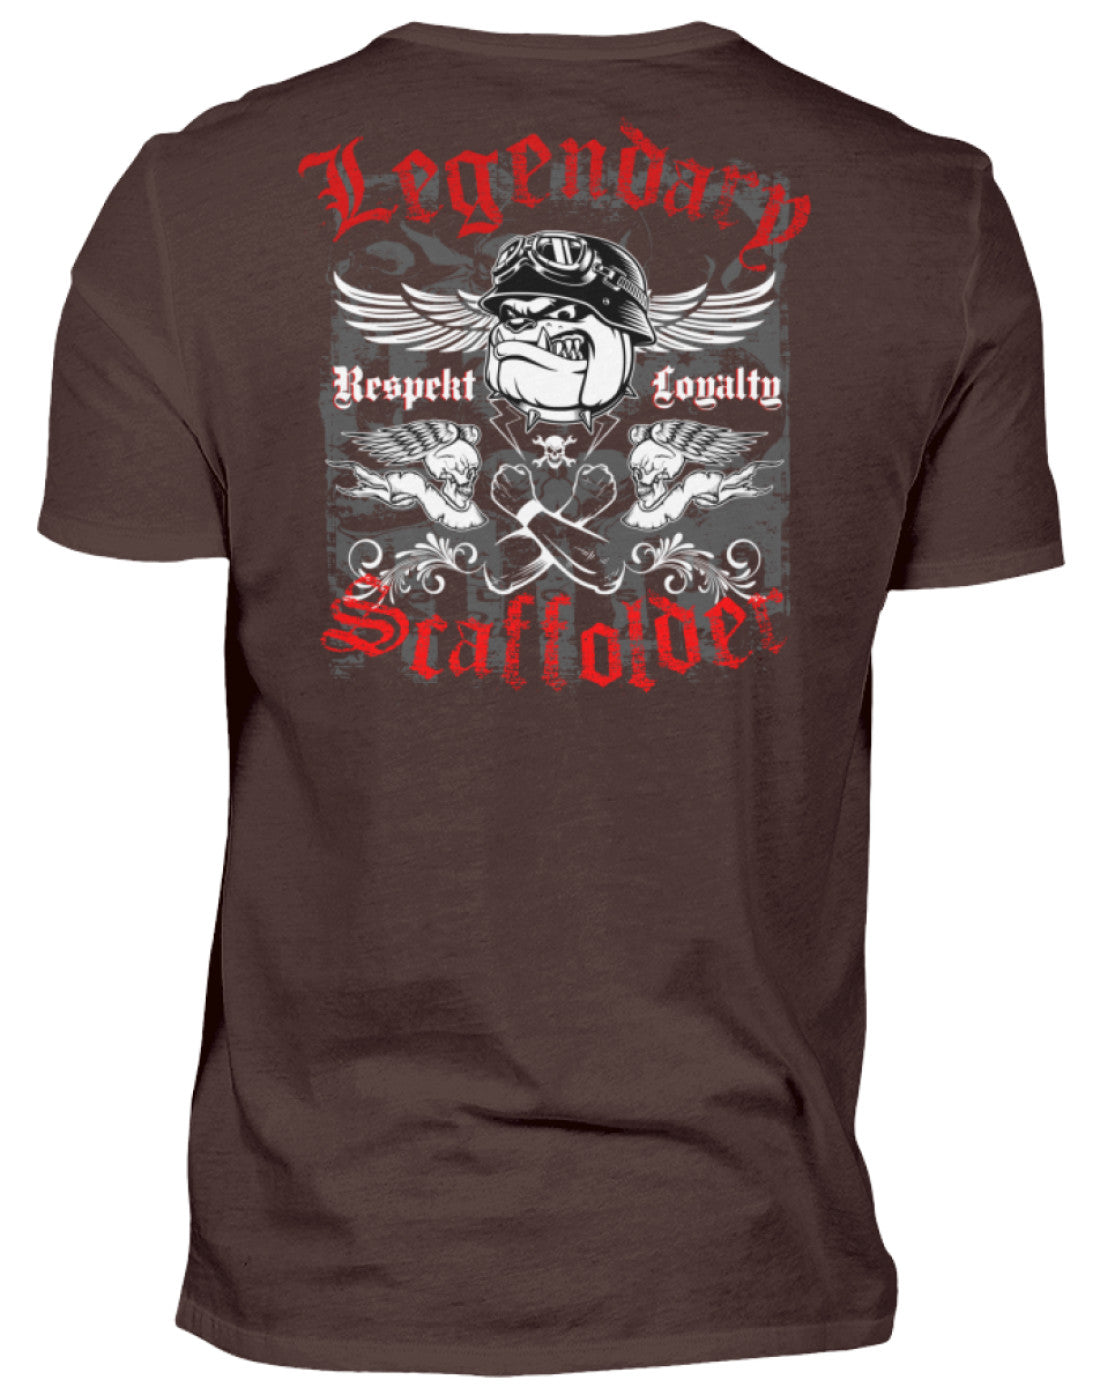 Legendary Scaffolder  - Herren Shirt €22.95 Gerüstbauer - Shop >>